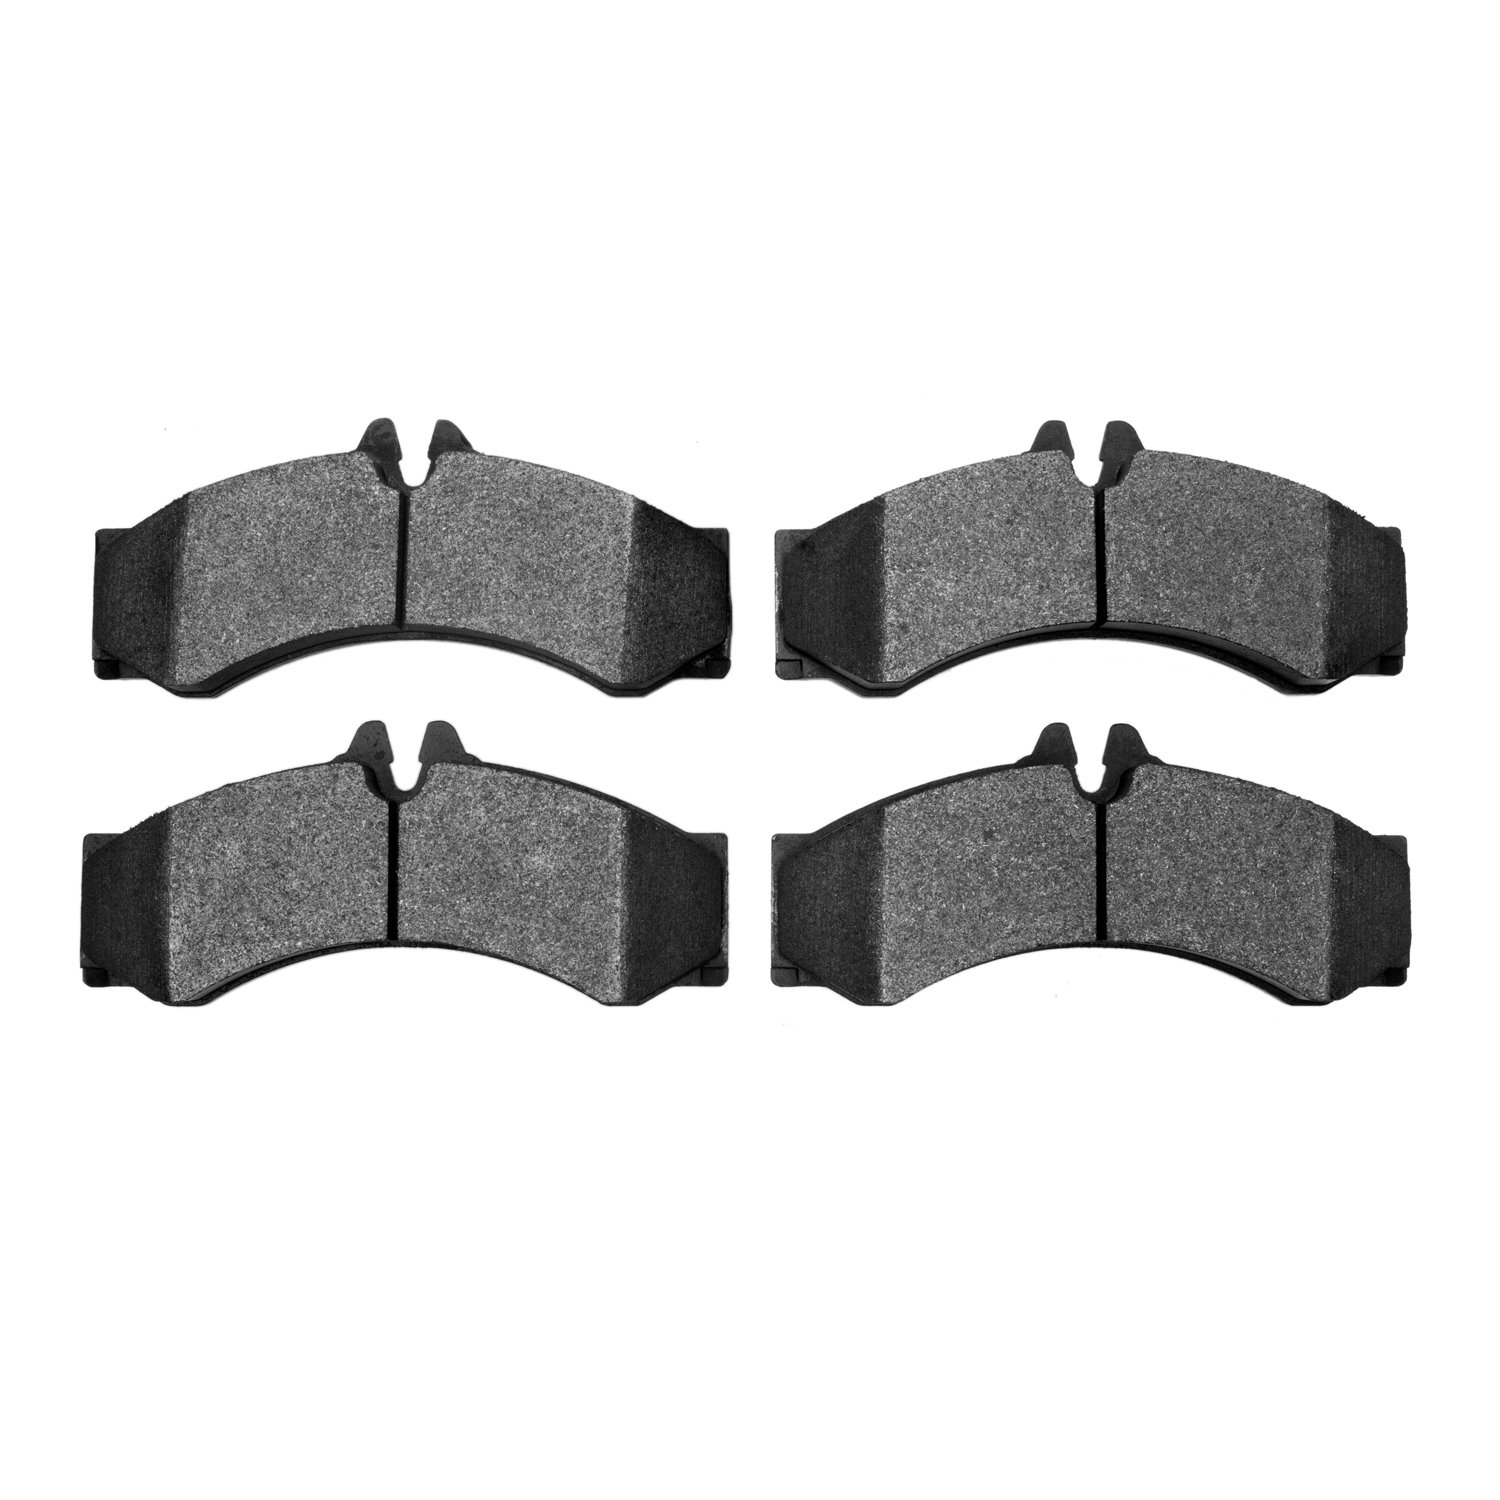 1214-1136-00 Heavy-Duty Semi-Metallic Brake Pads, 2002-2006 Multiple Makes/Models, Position: Front,Fr,Rear,Rr